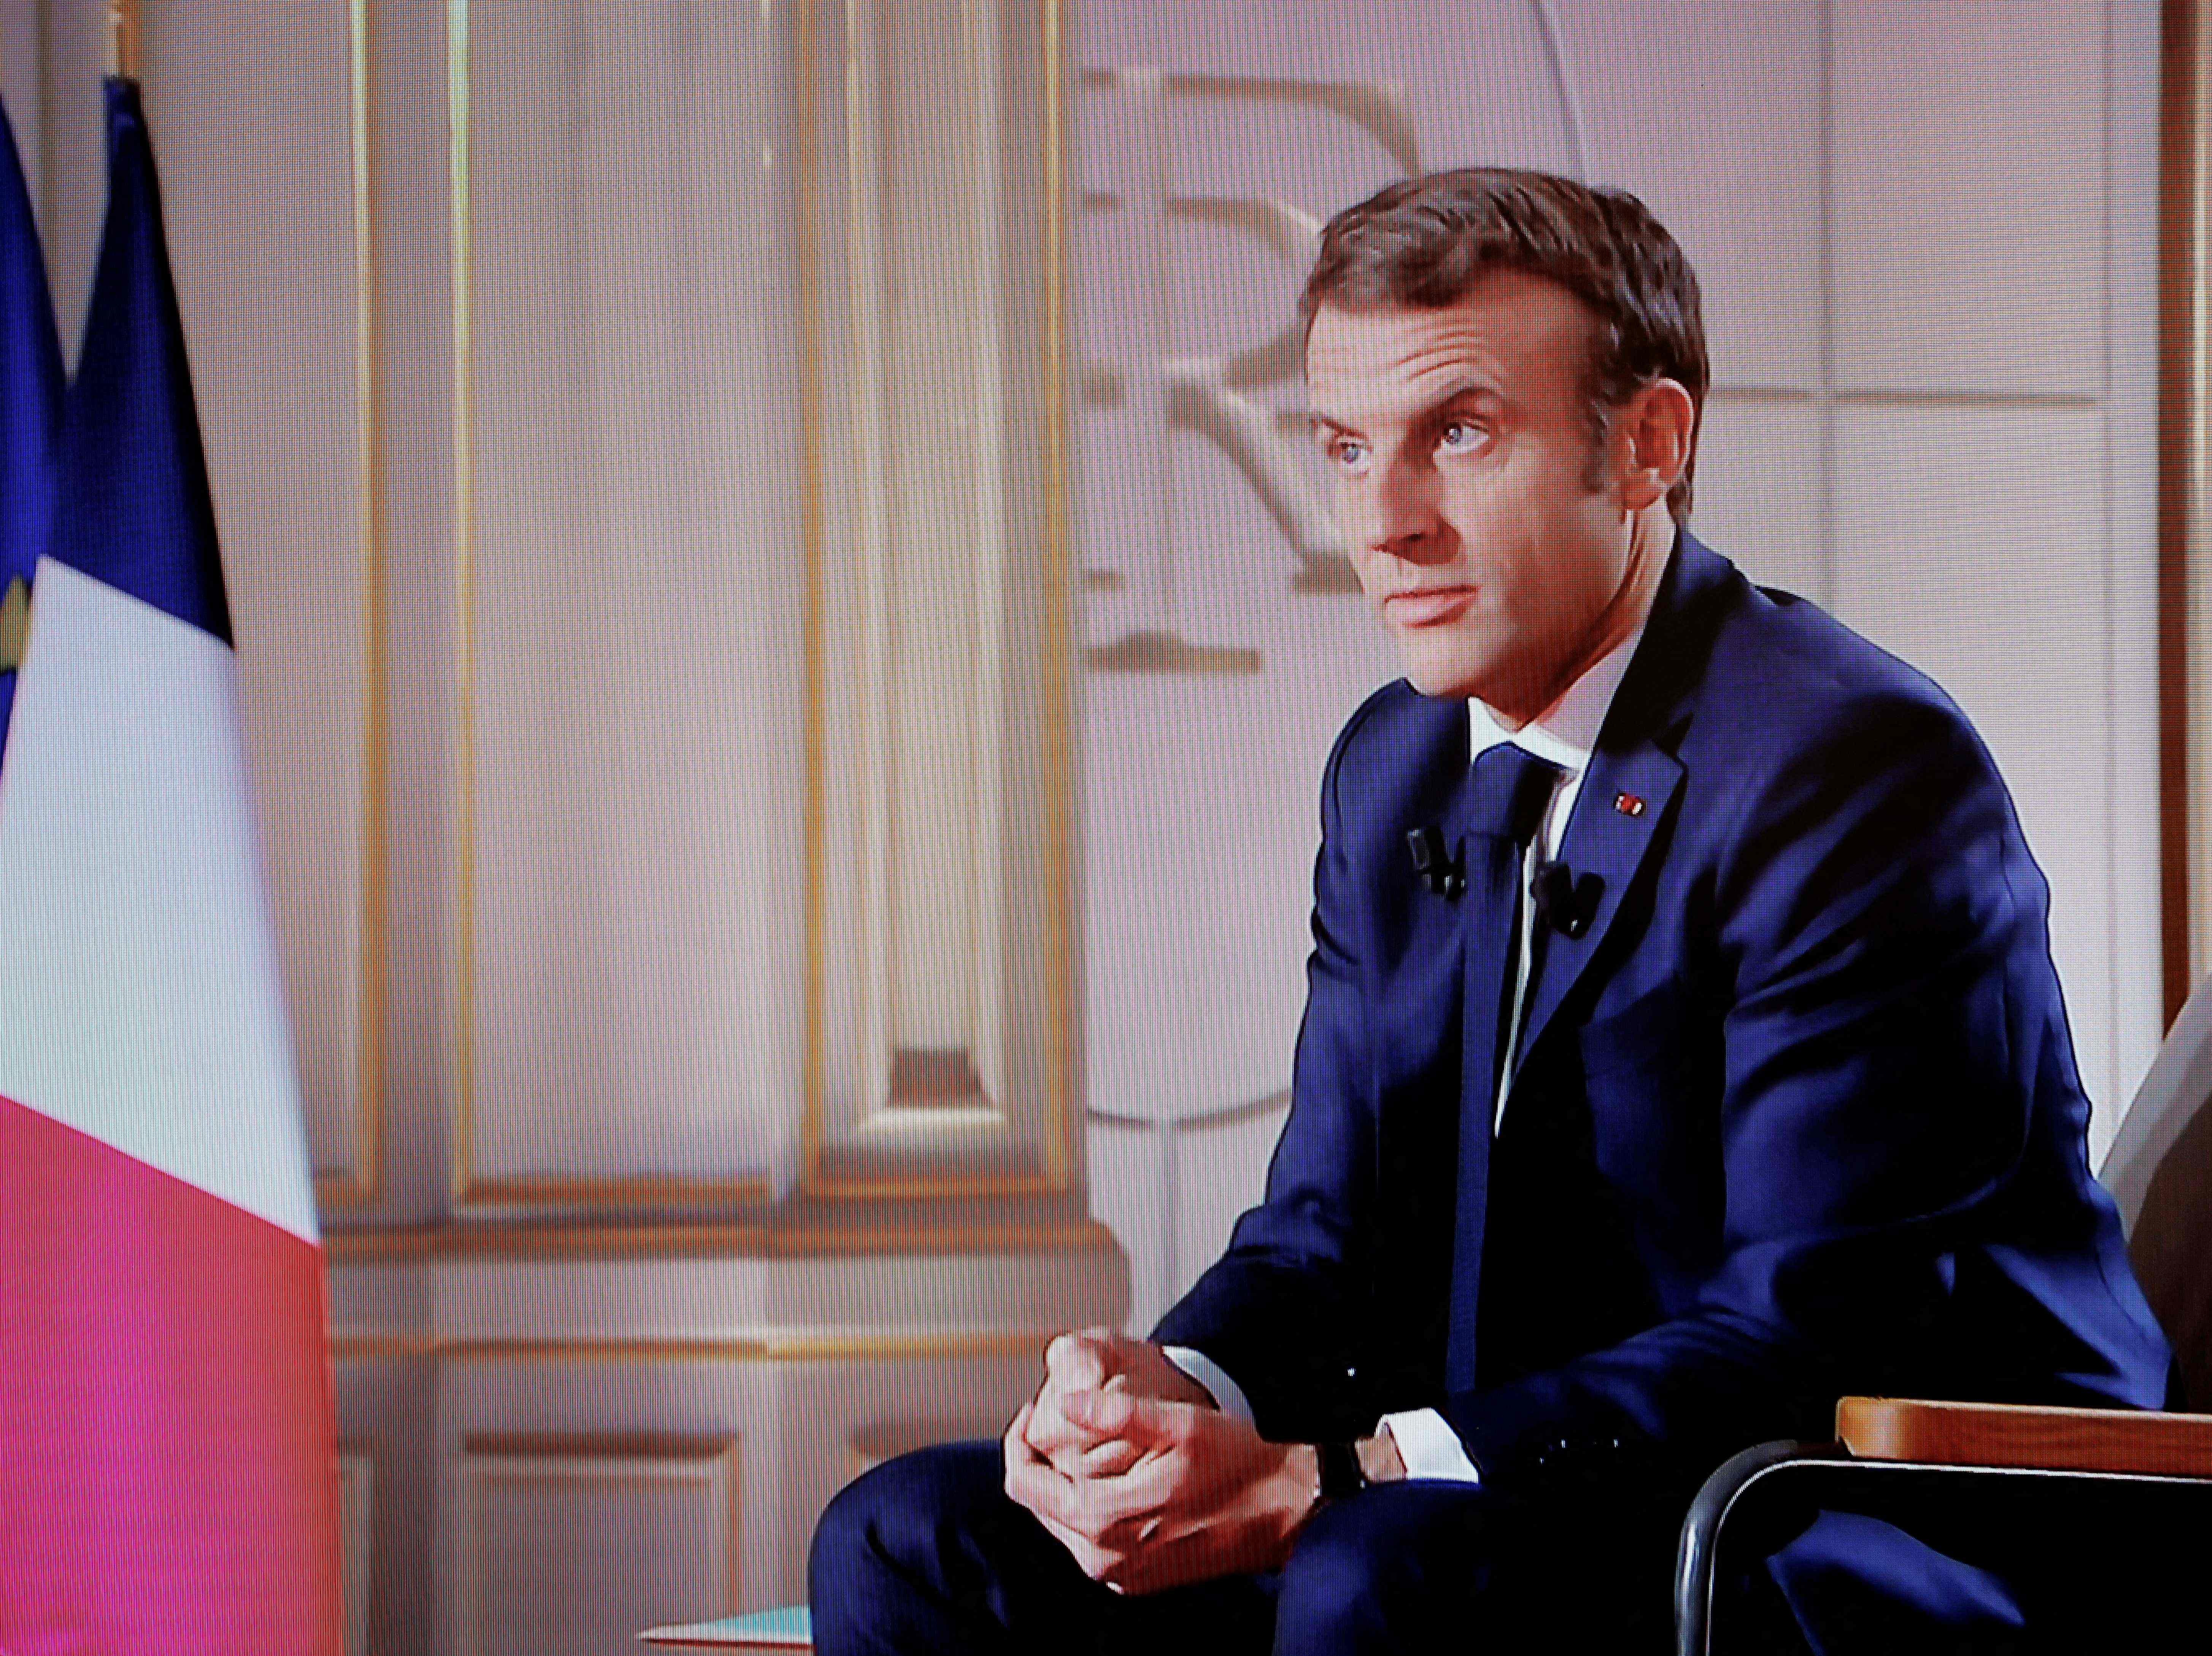 Emmanuel Macron during a TV interview last month